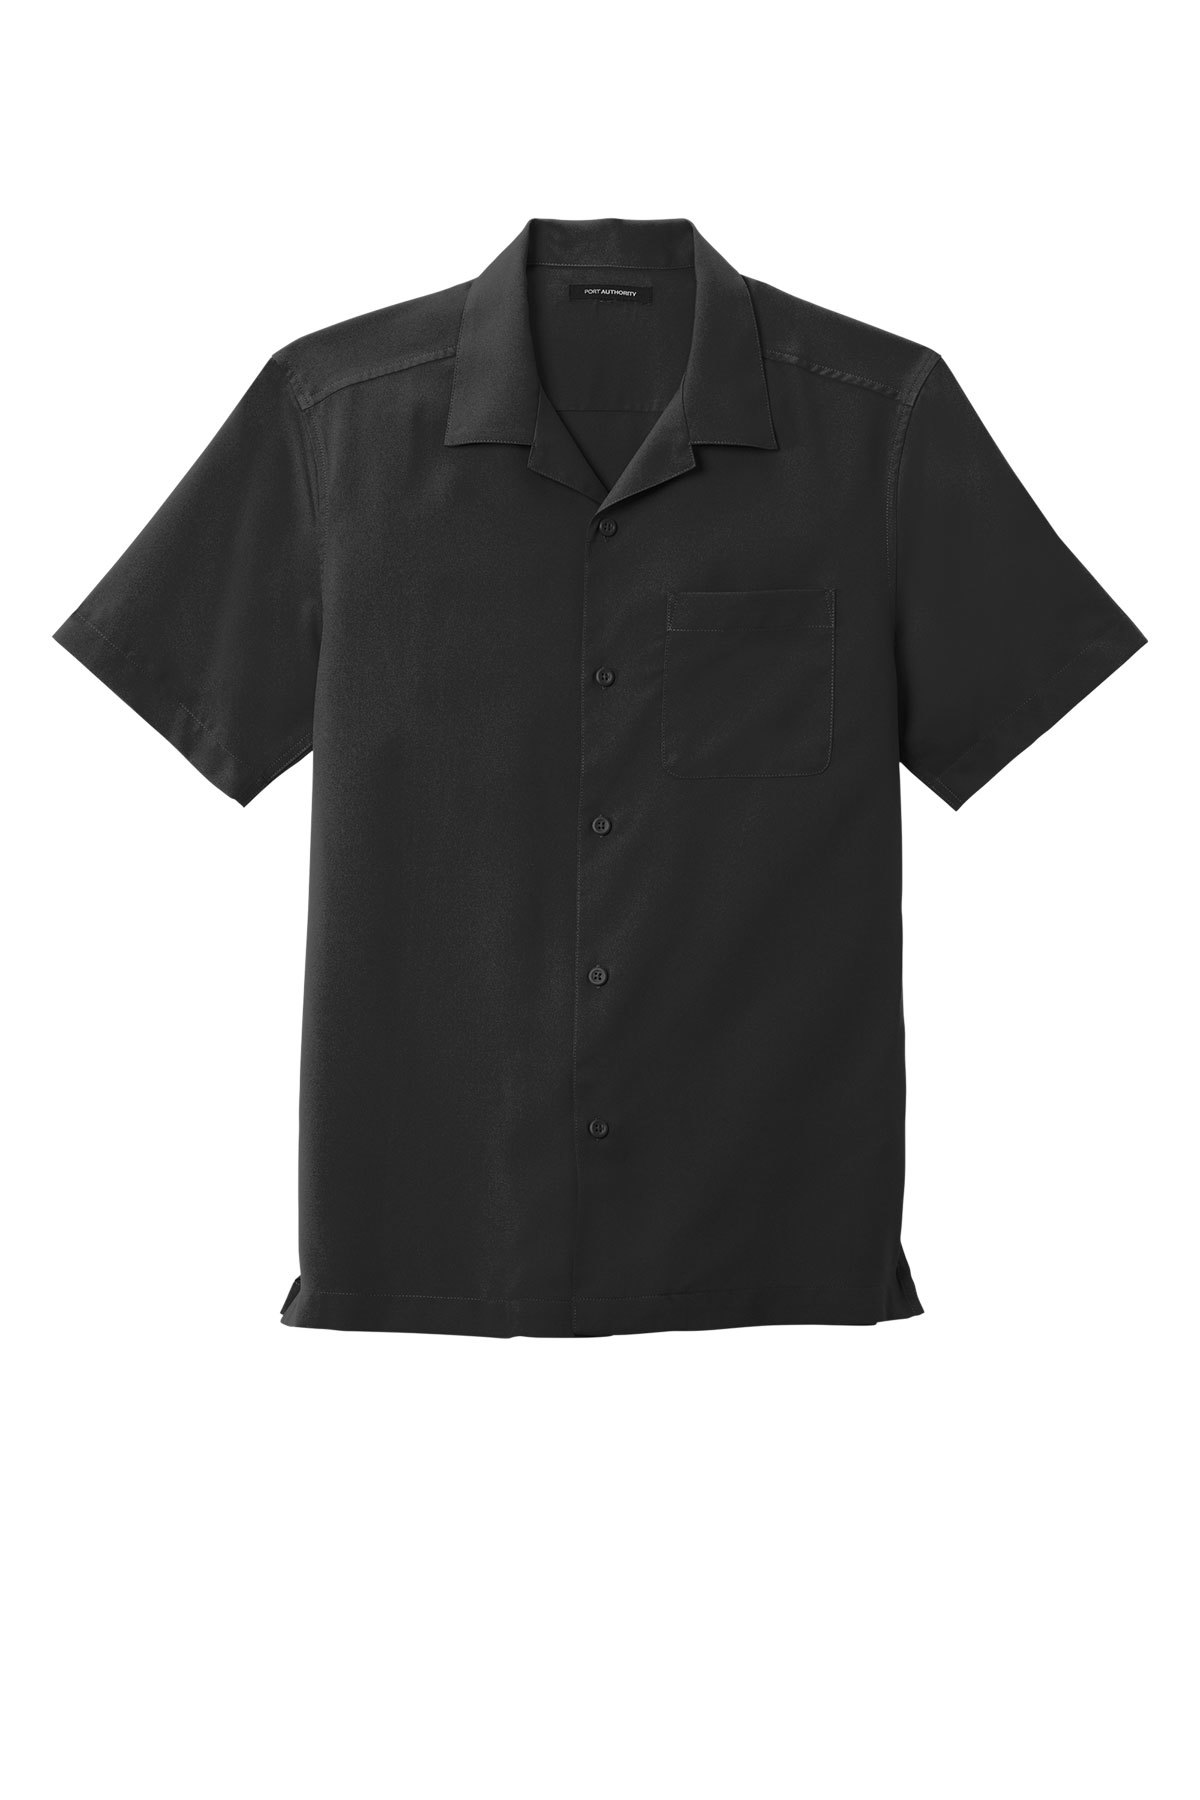 Port Authority Short Sleeve Performance Staff Shirt | Product | SanMar